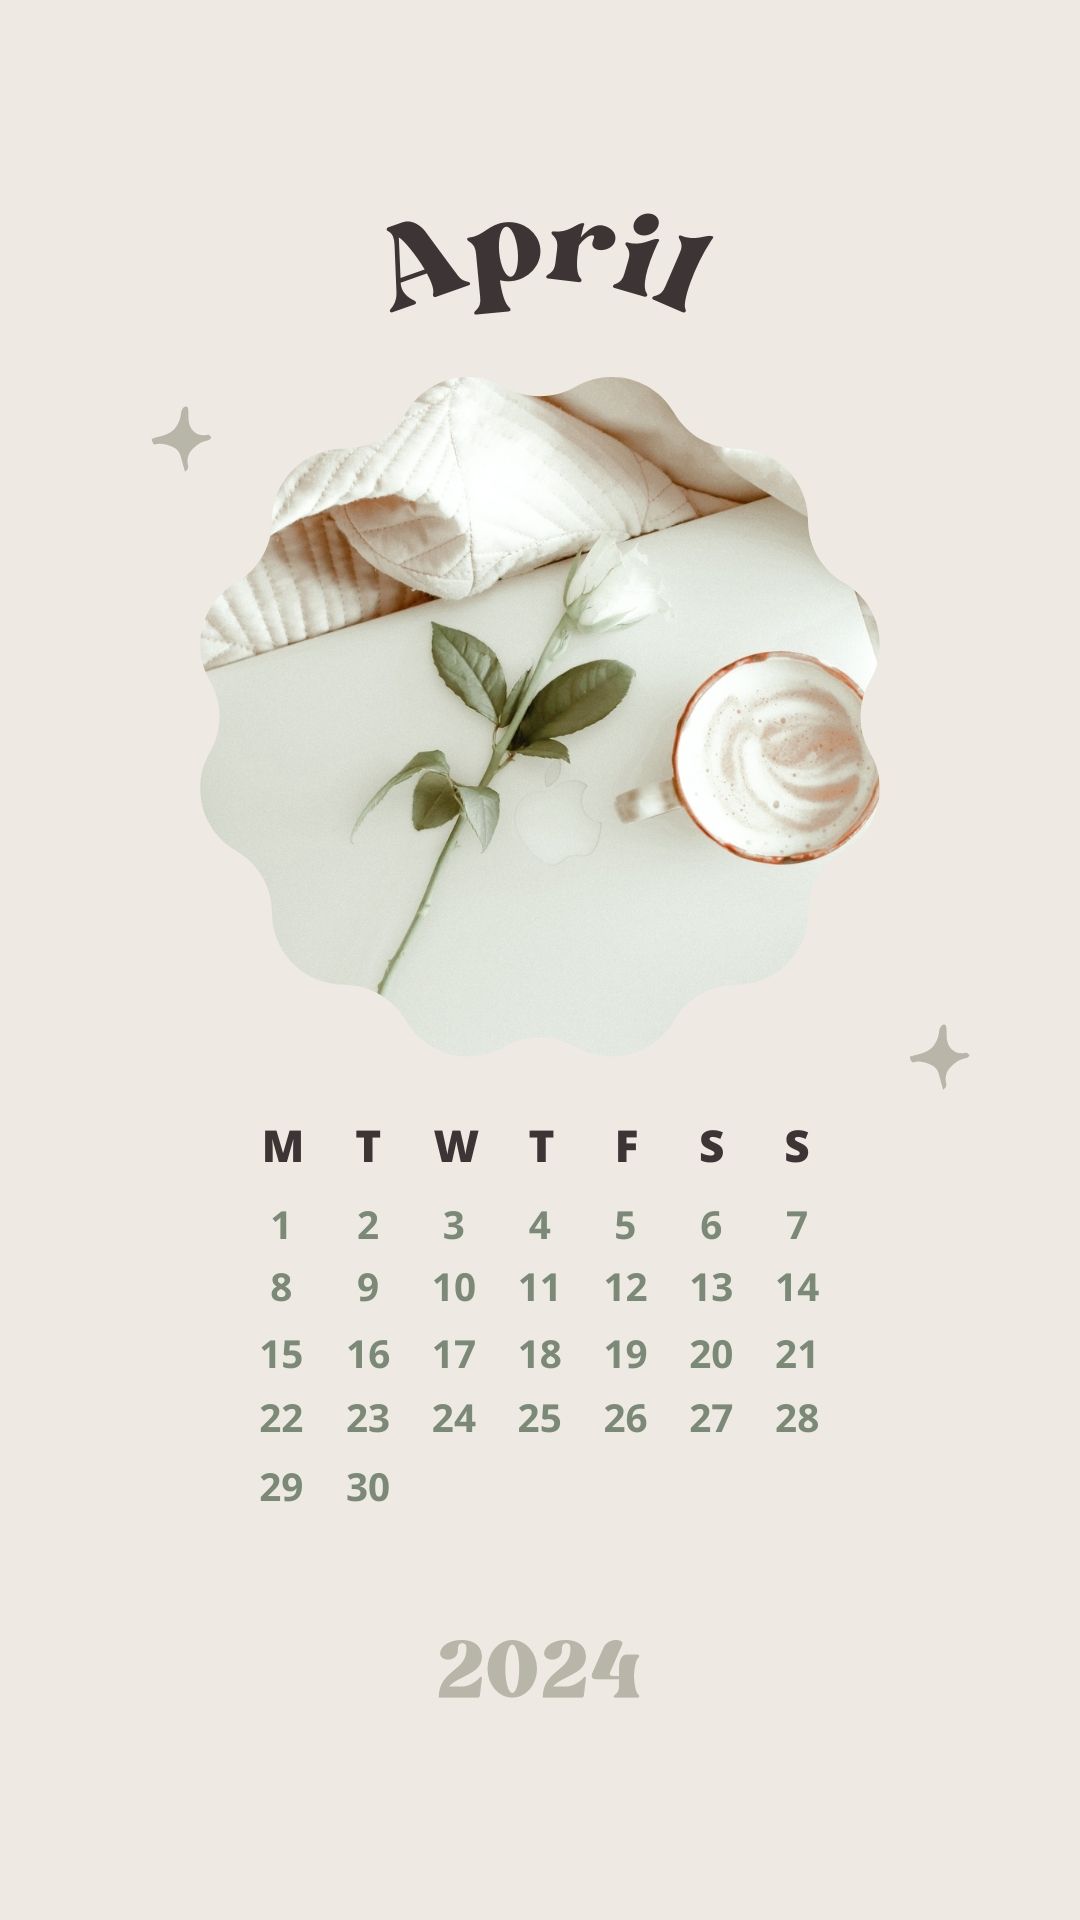 april 2024 sage green aesthetic phone background wallpaper calendar